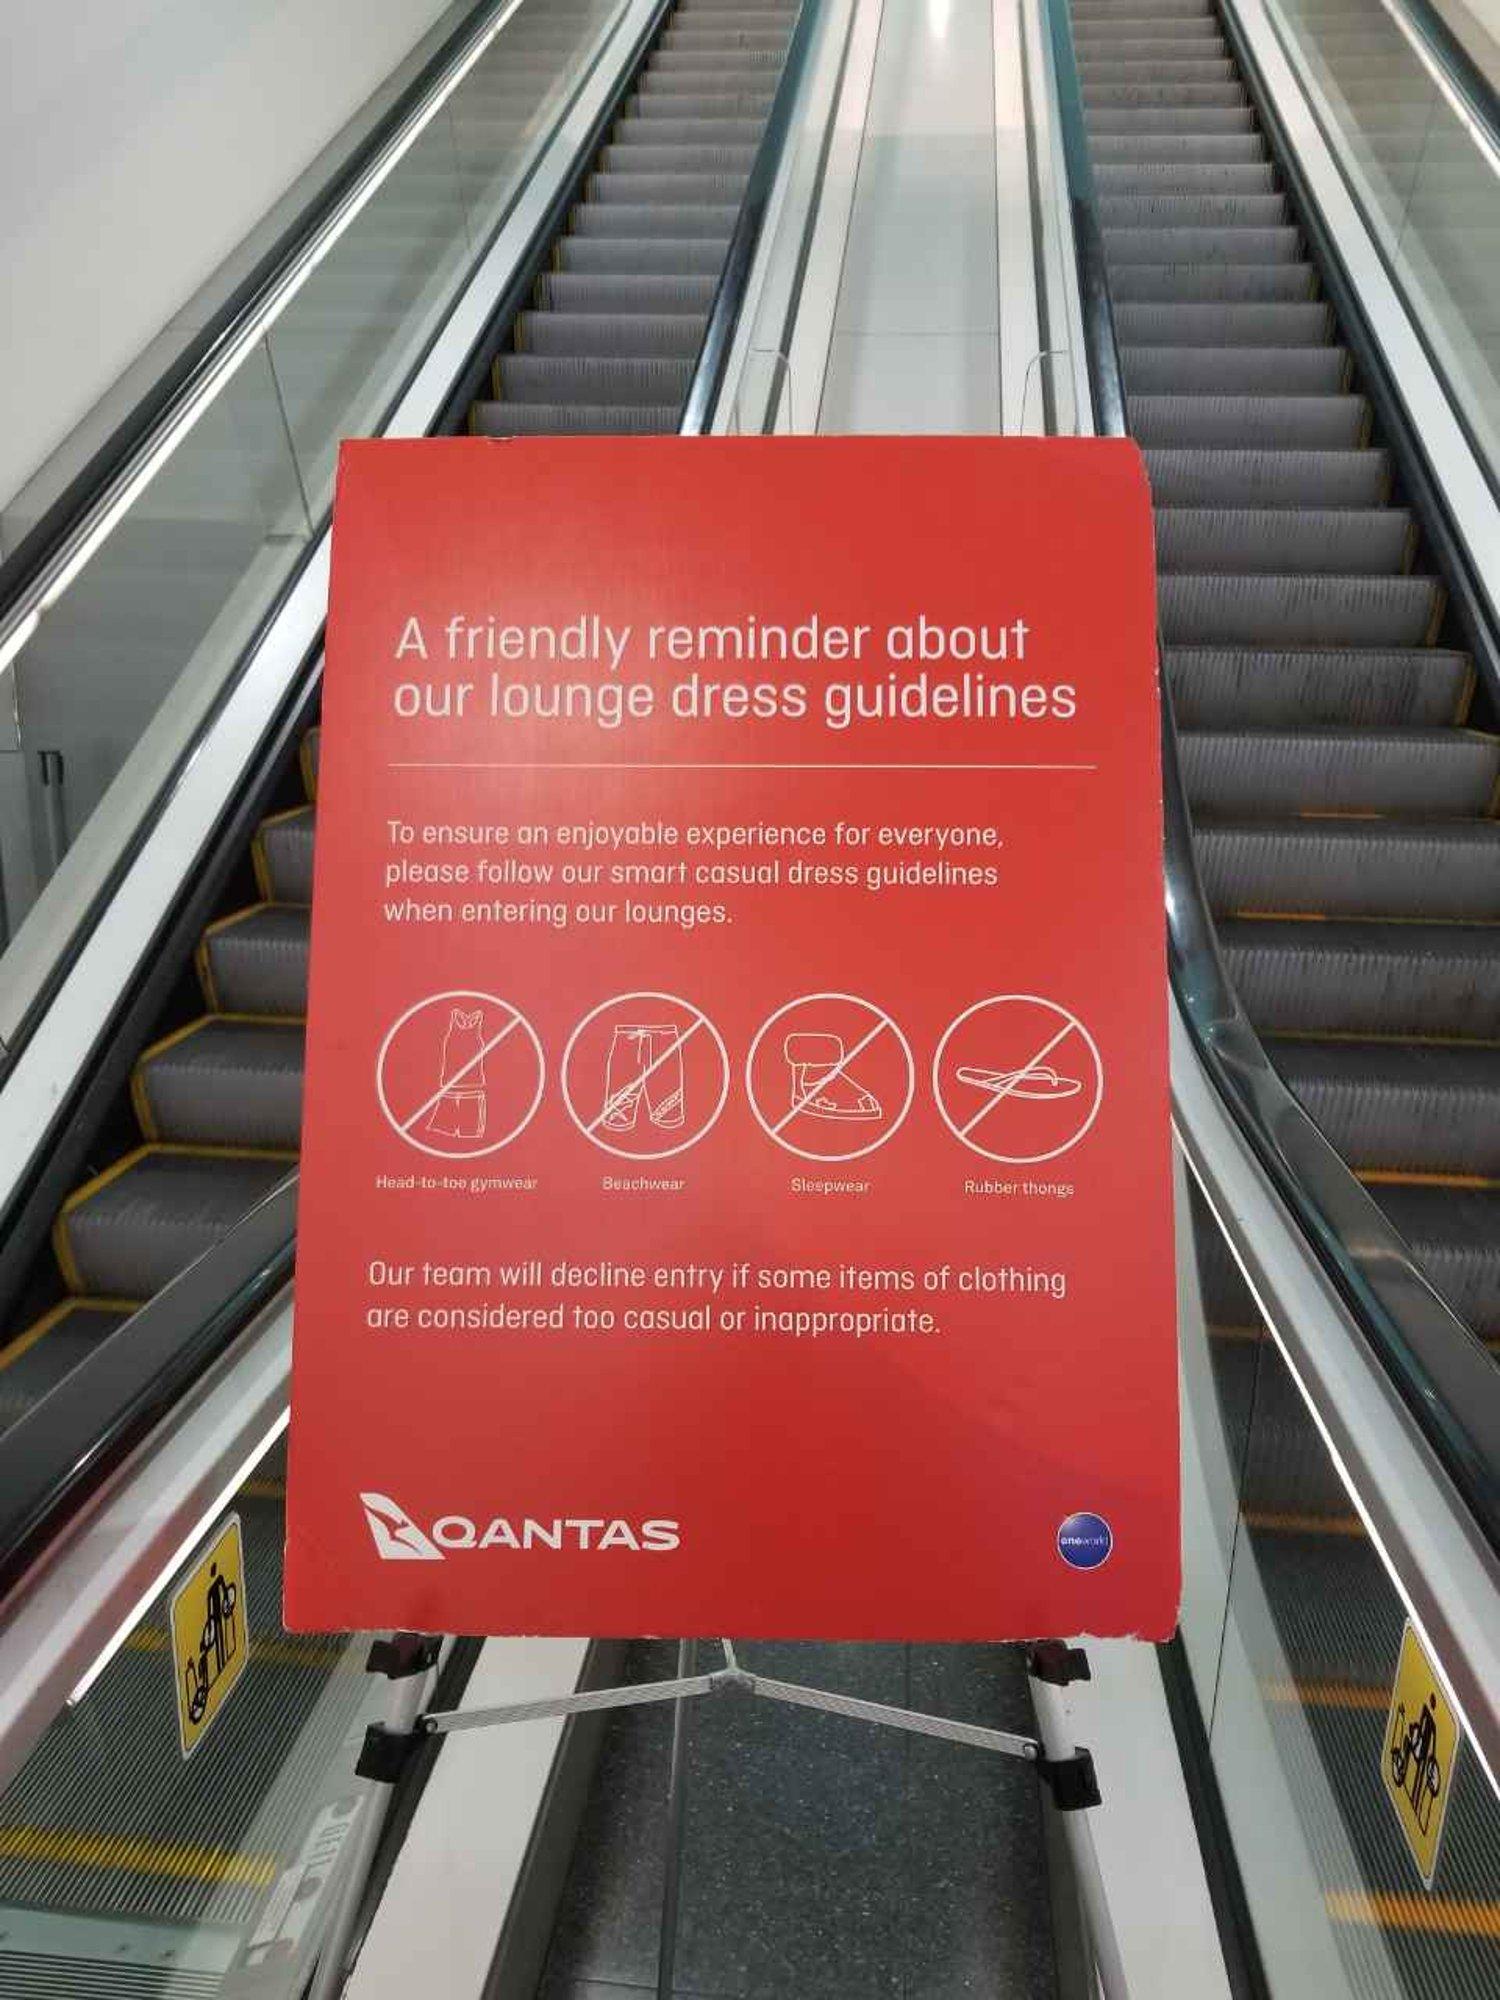 Qantas Airways Domestic Business Lounge image 1 of 1